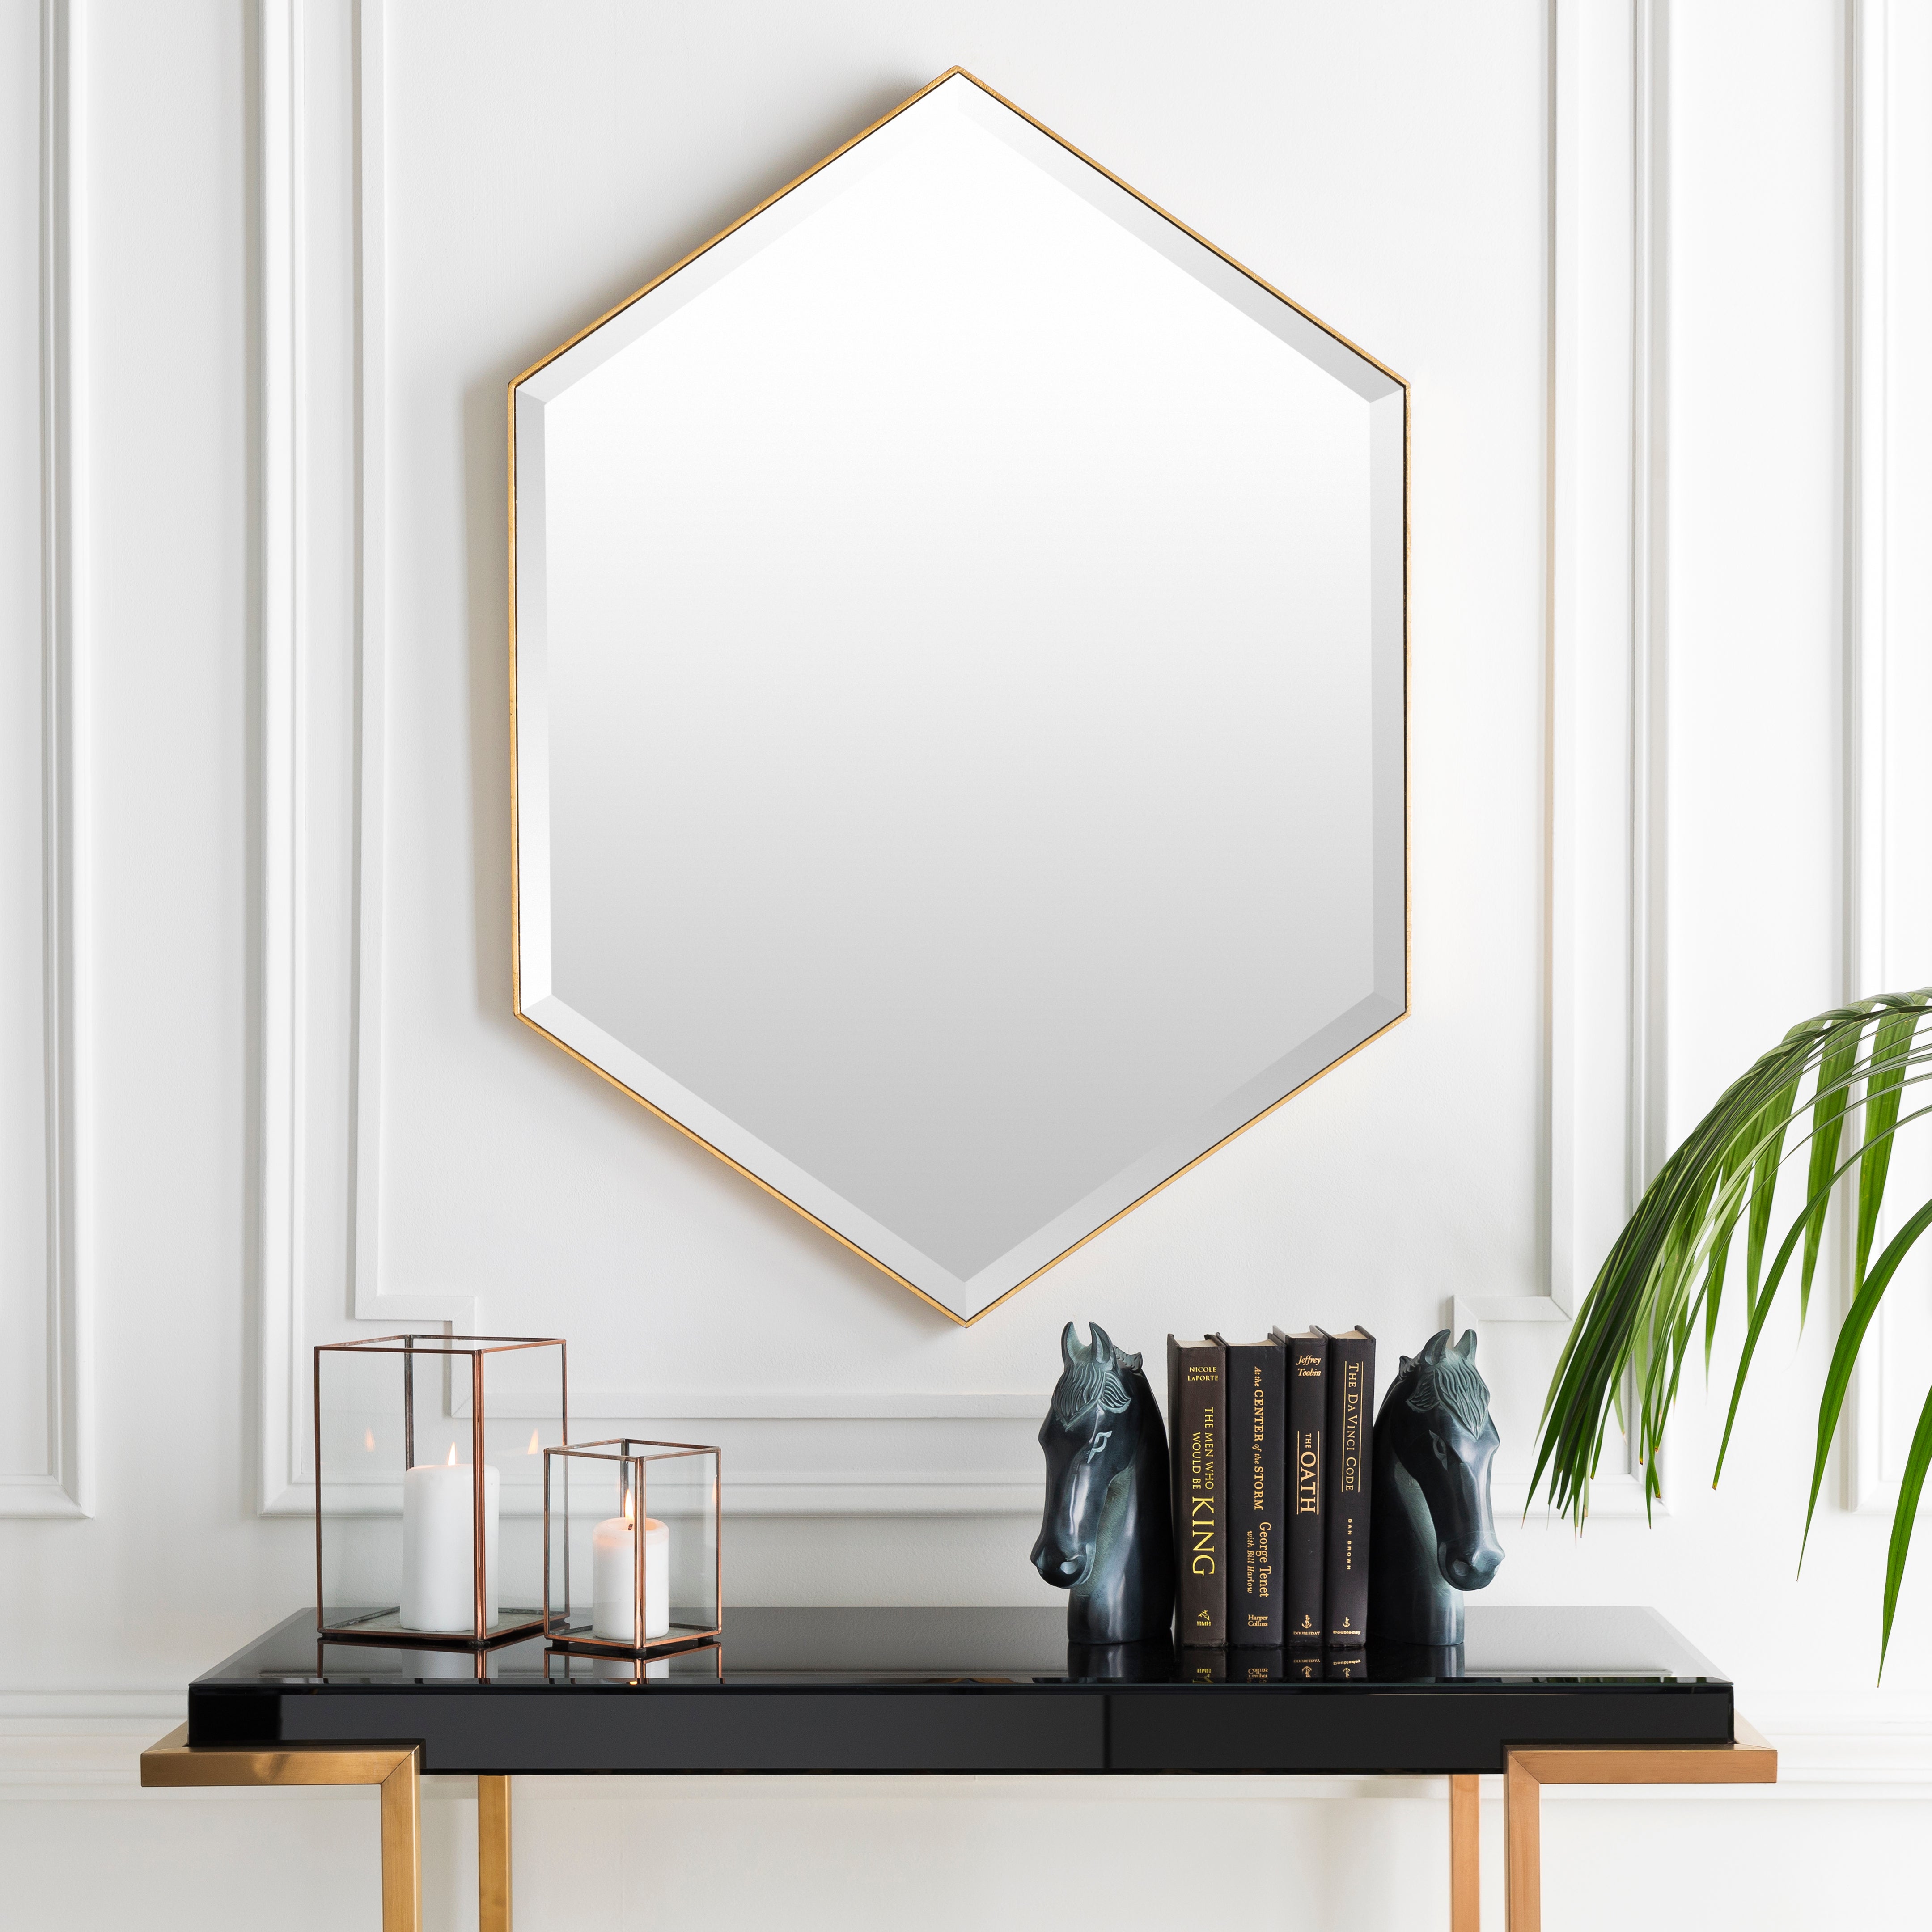 Mclin Mirror 1-Mirror-Livabliss-Wall2Wall Furnishings